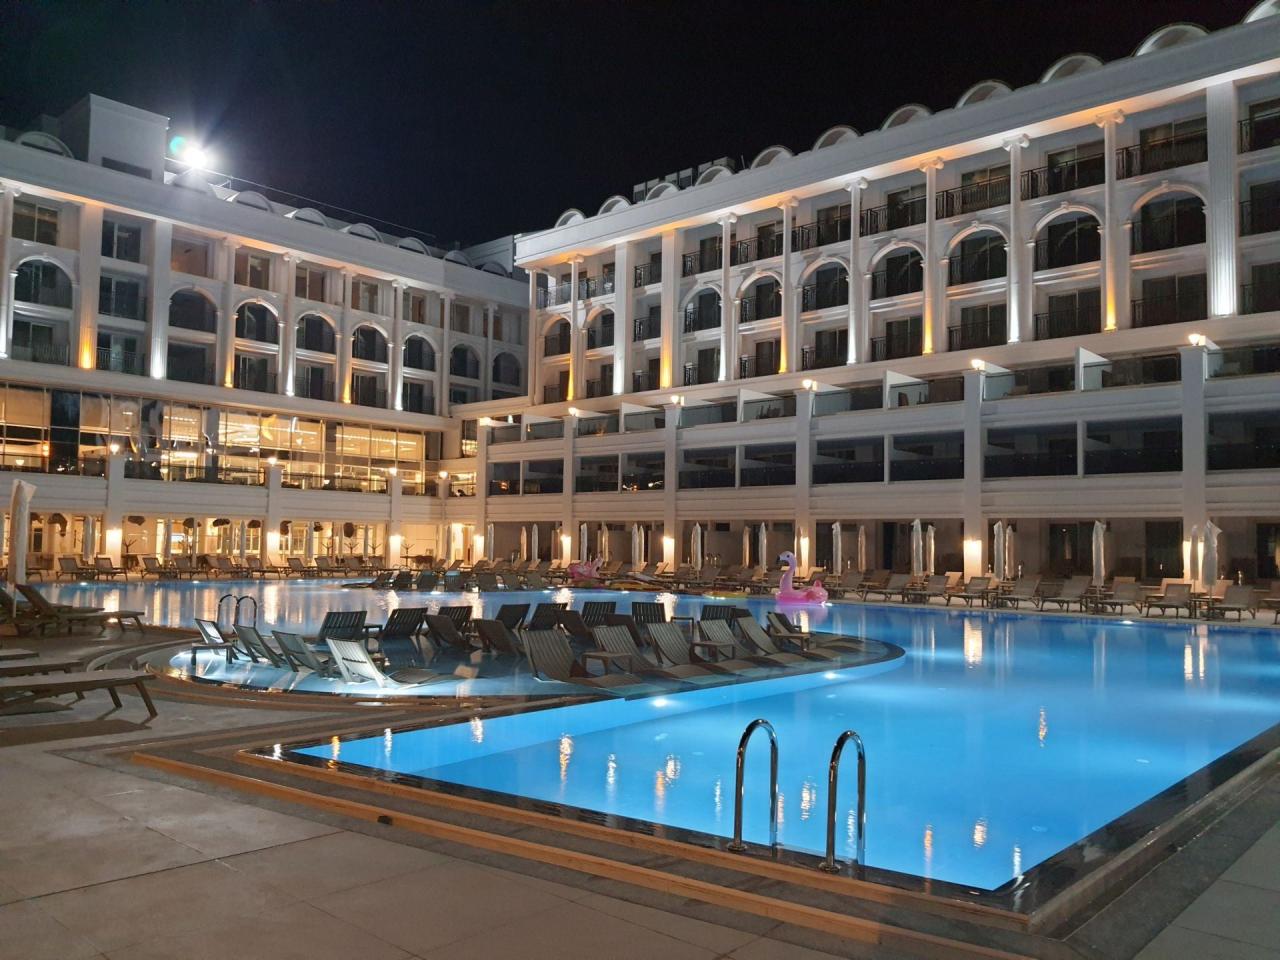 Sunthalia Hotels & Resorts